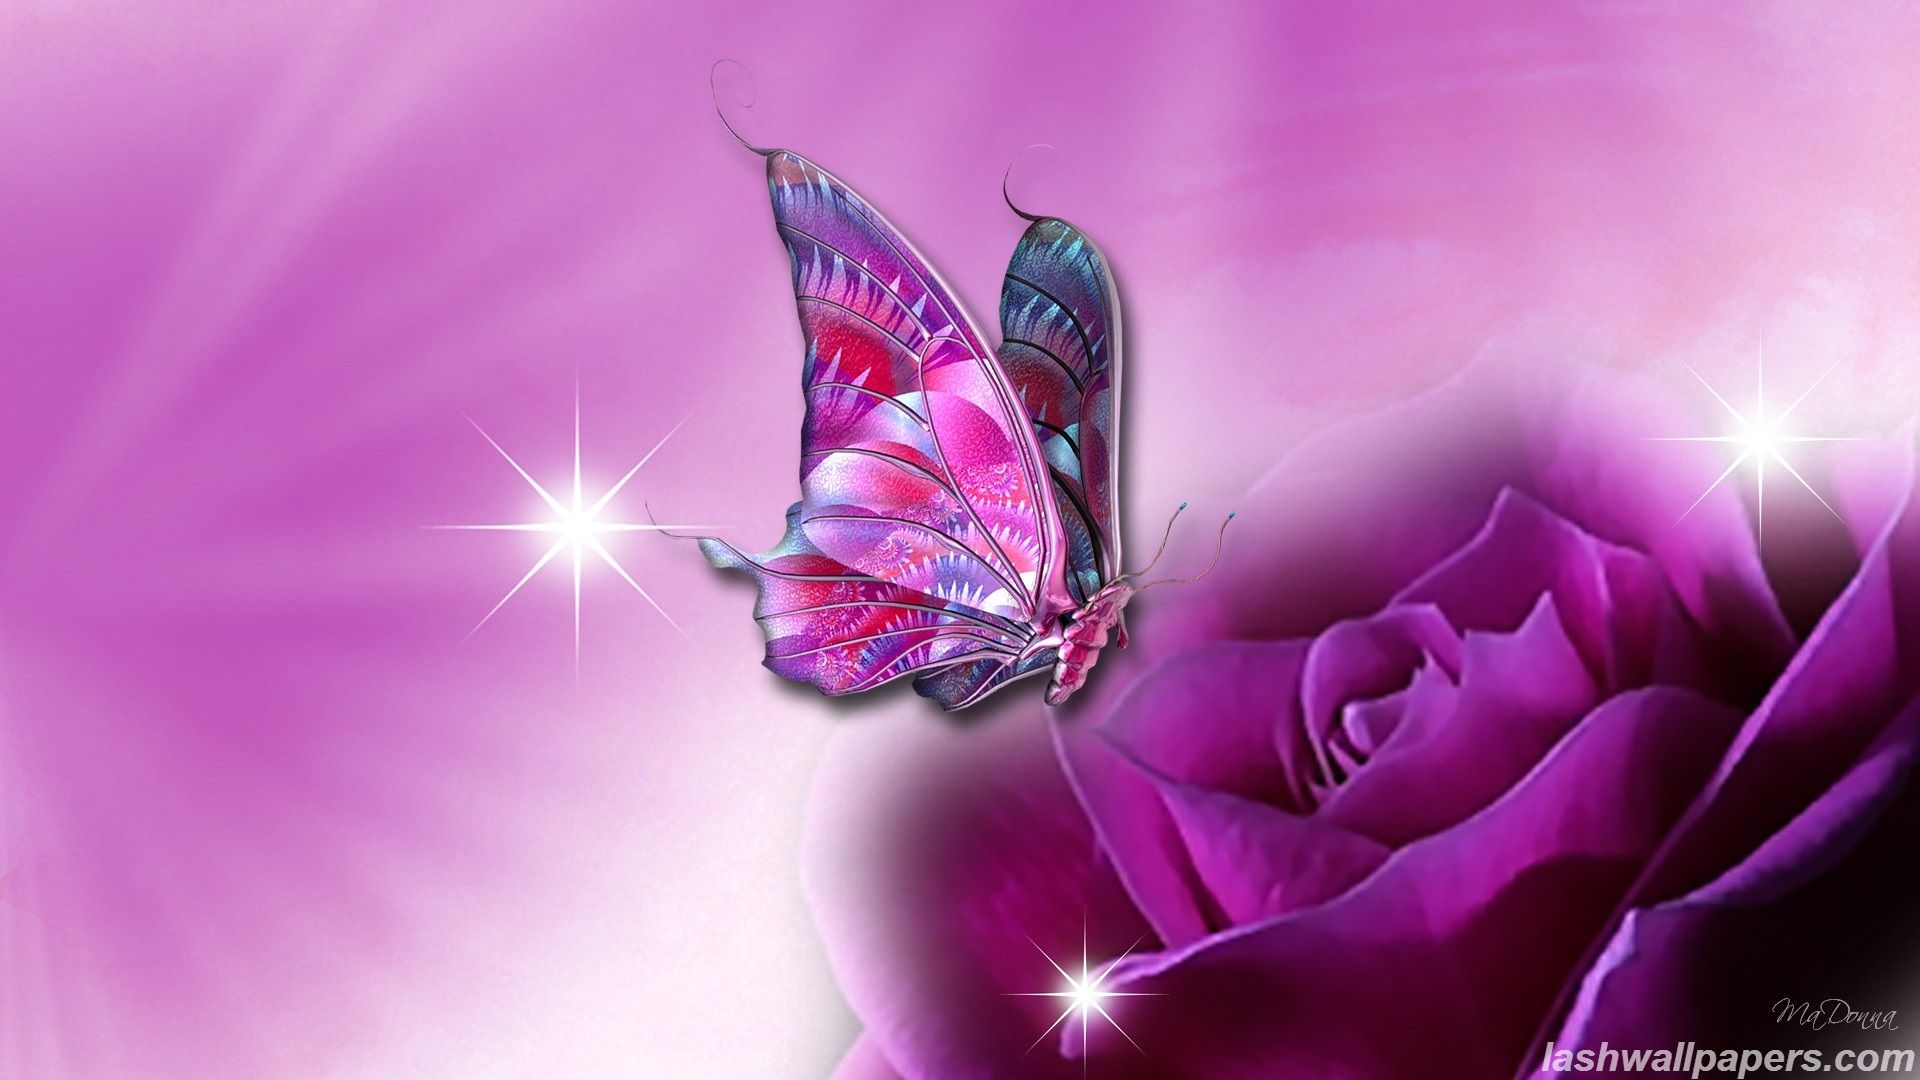 Butterfly Wallpaper Free Download - HD Wallpapers Pretty